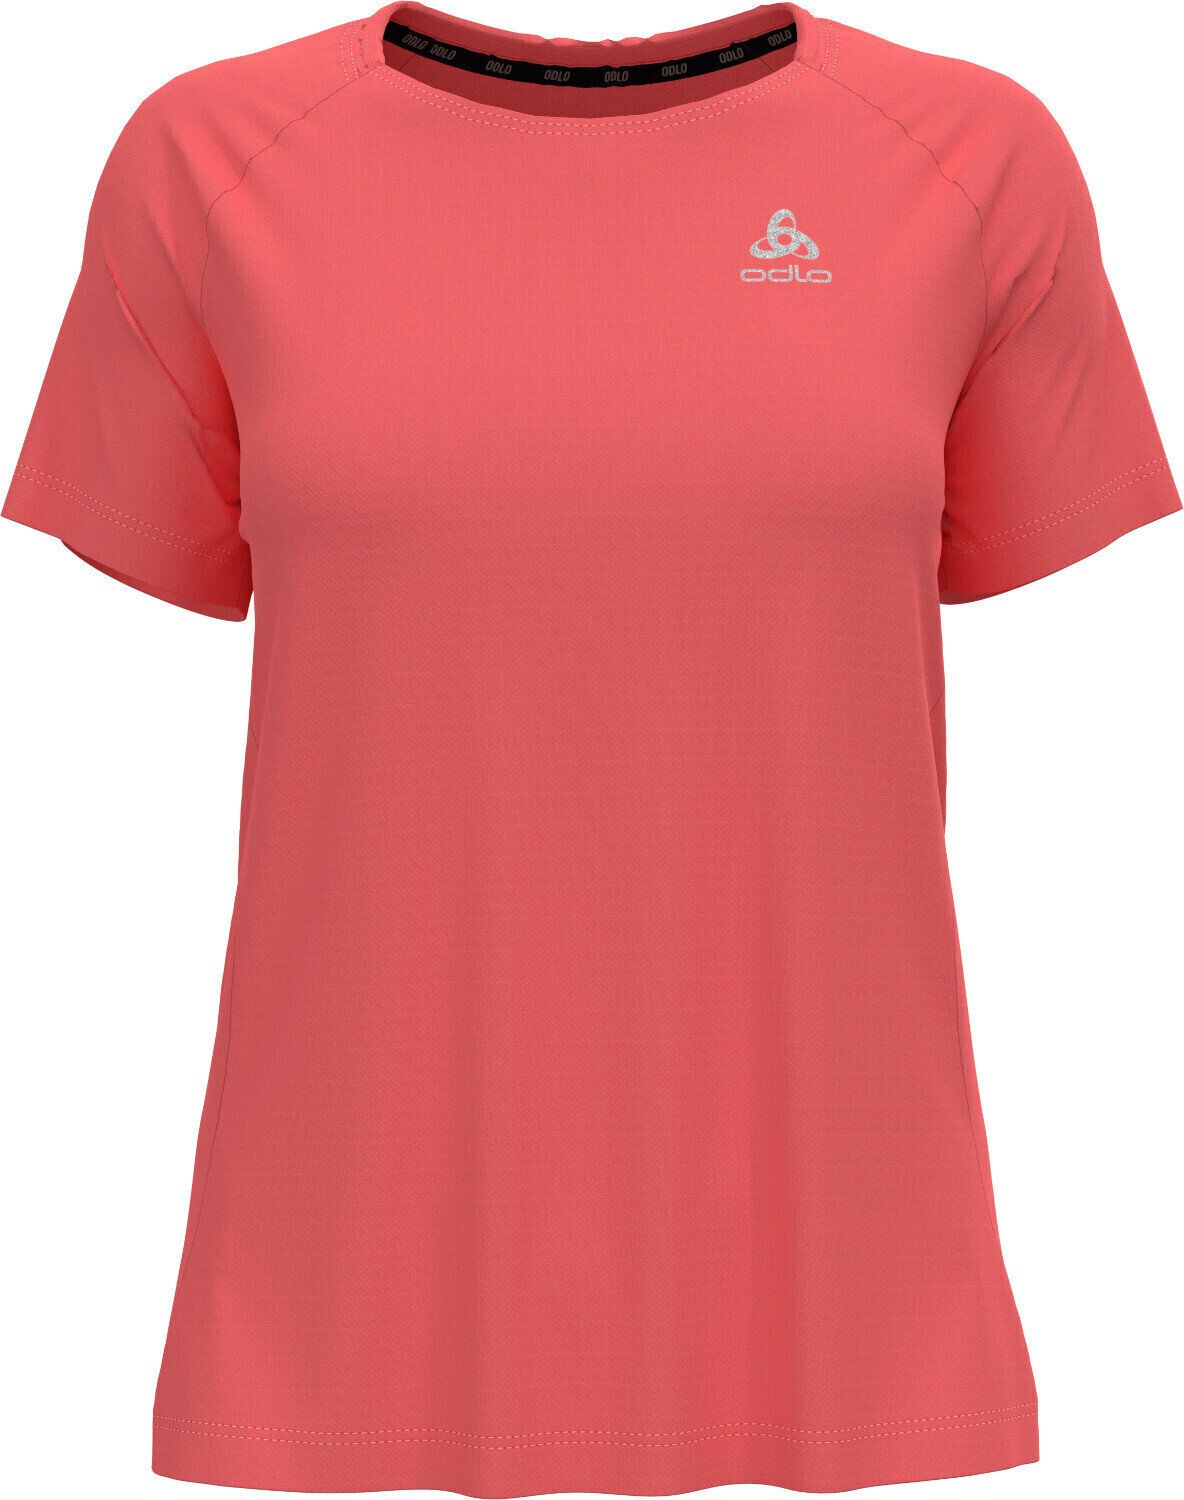 Running t-shirt with short sleeves
 Odlo Essential T-Shirt Siesta M Running t-shirt with short sleeves